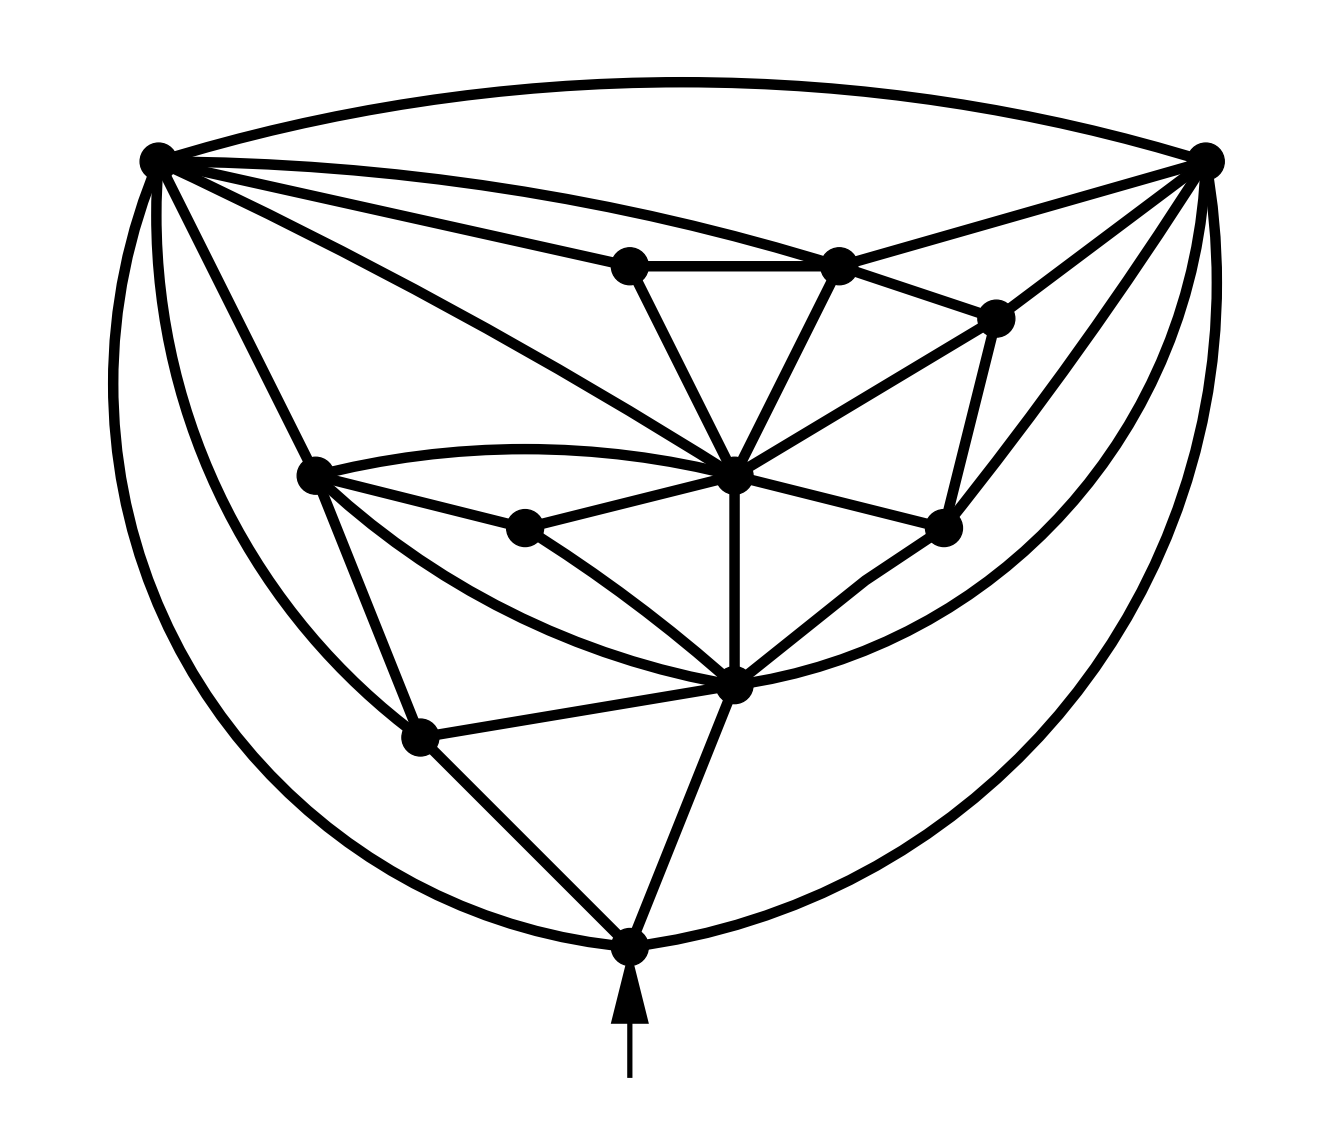 A triangulation